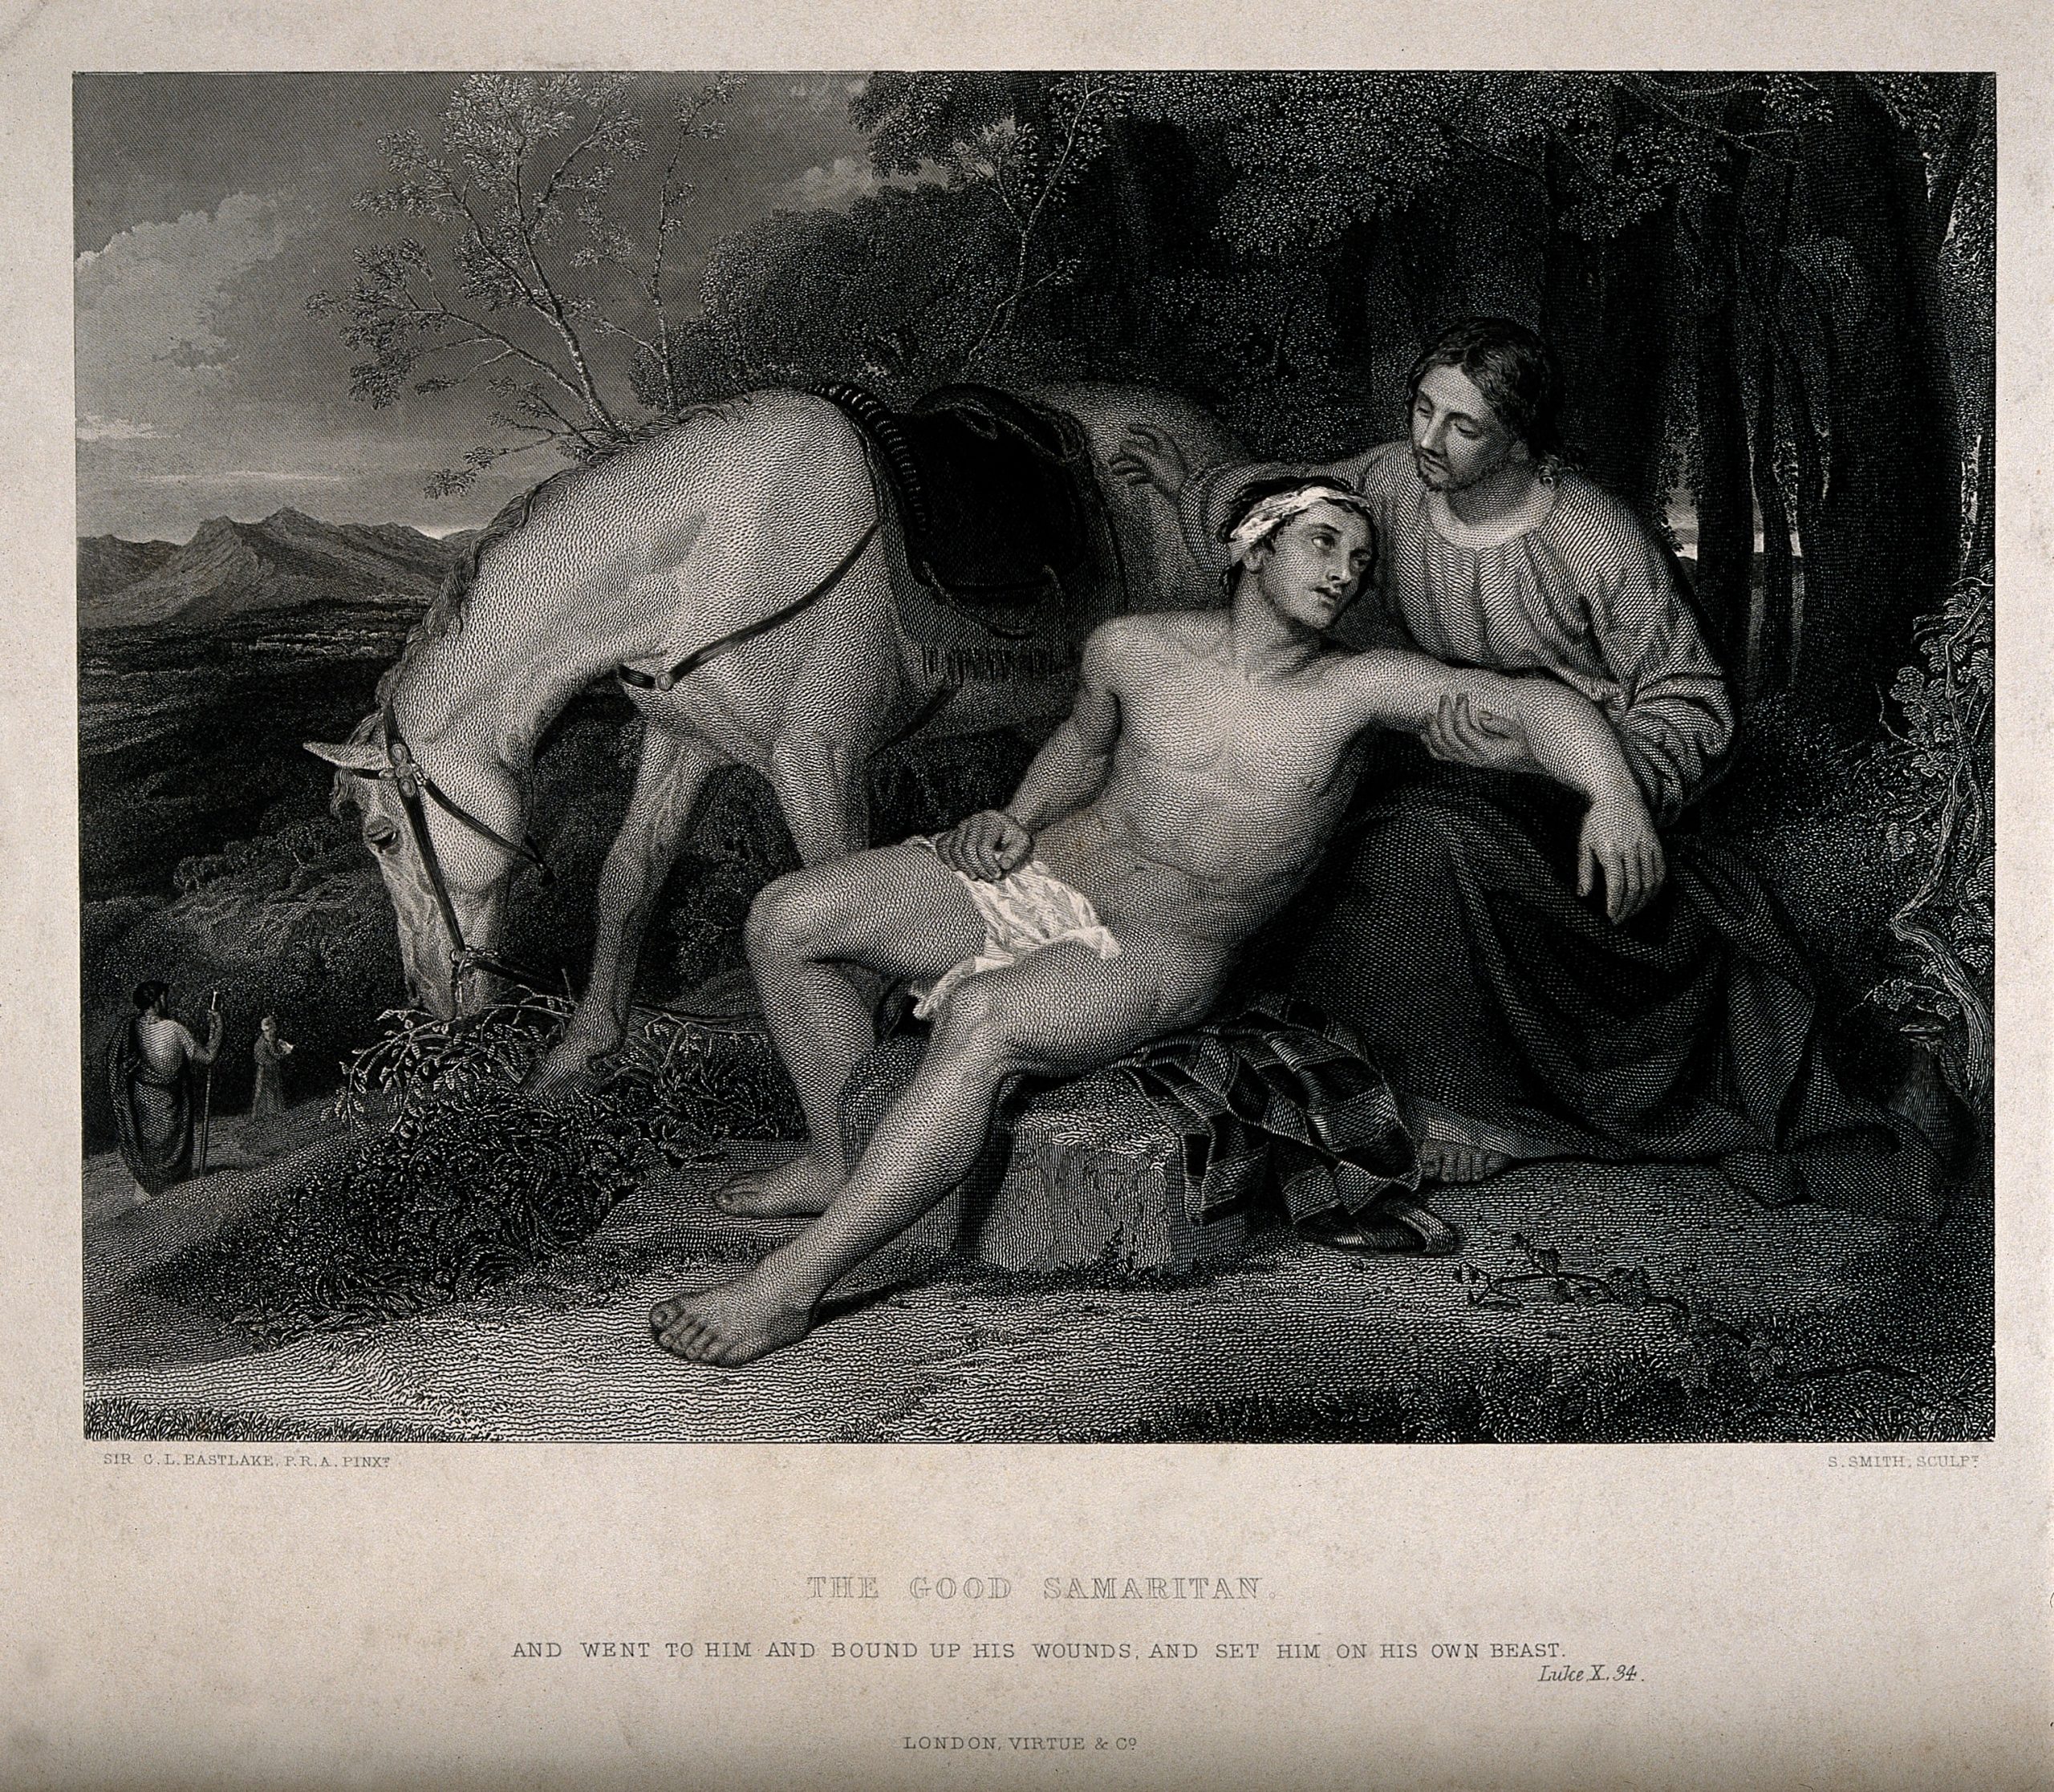 Image showing the Good Samaritan art work